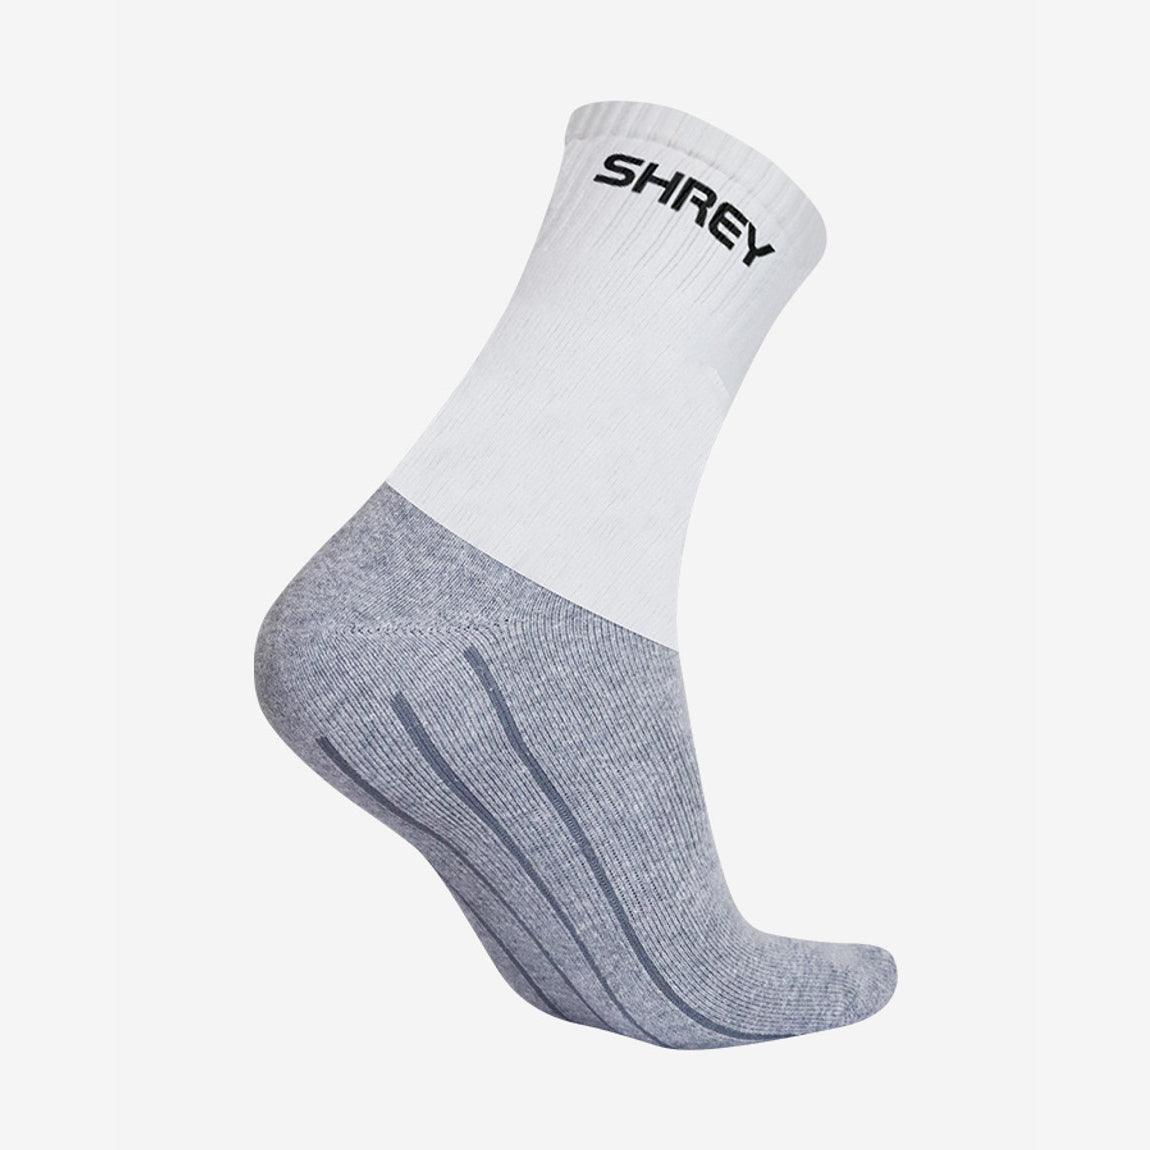 Shrey Original Performance Cricket Socks - 2 Pack - AT Sports